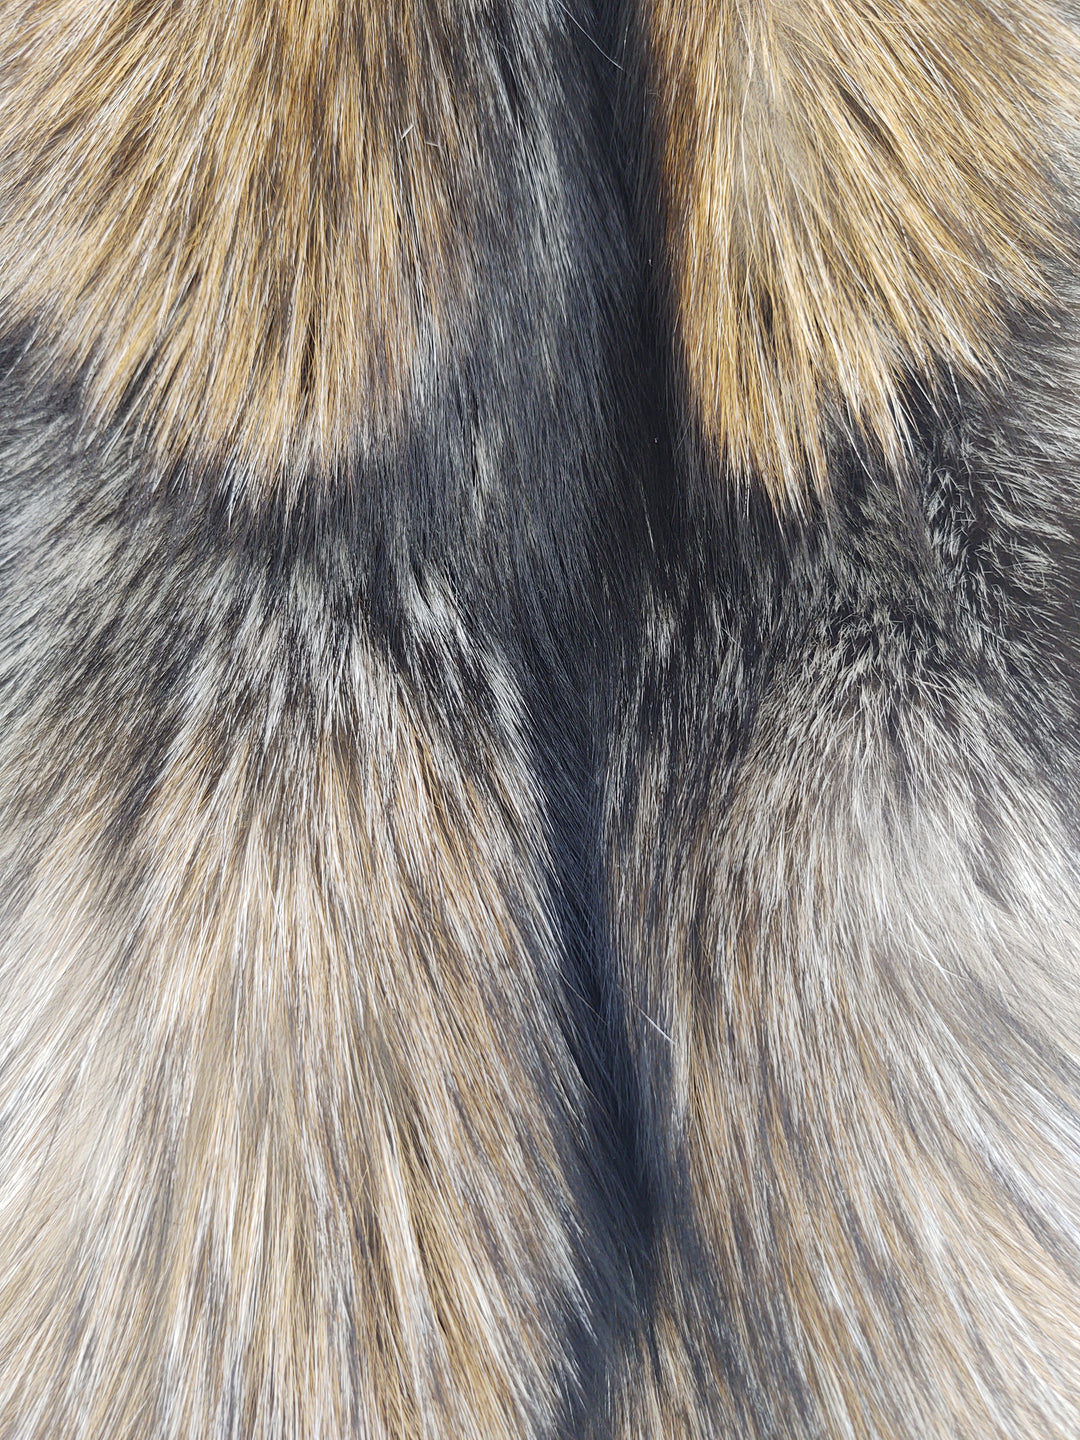 Golden Cross Fox - Dressed Fur Skin - Fur | STAMPE PELS